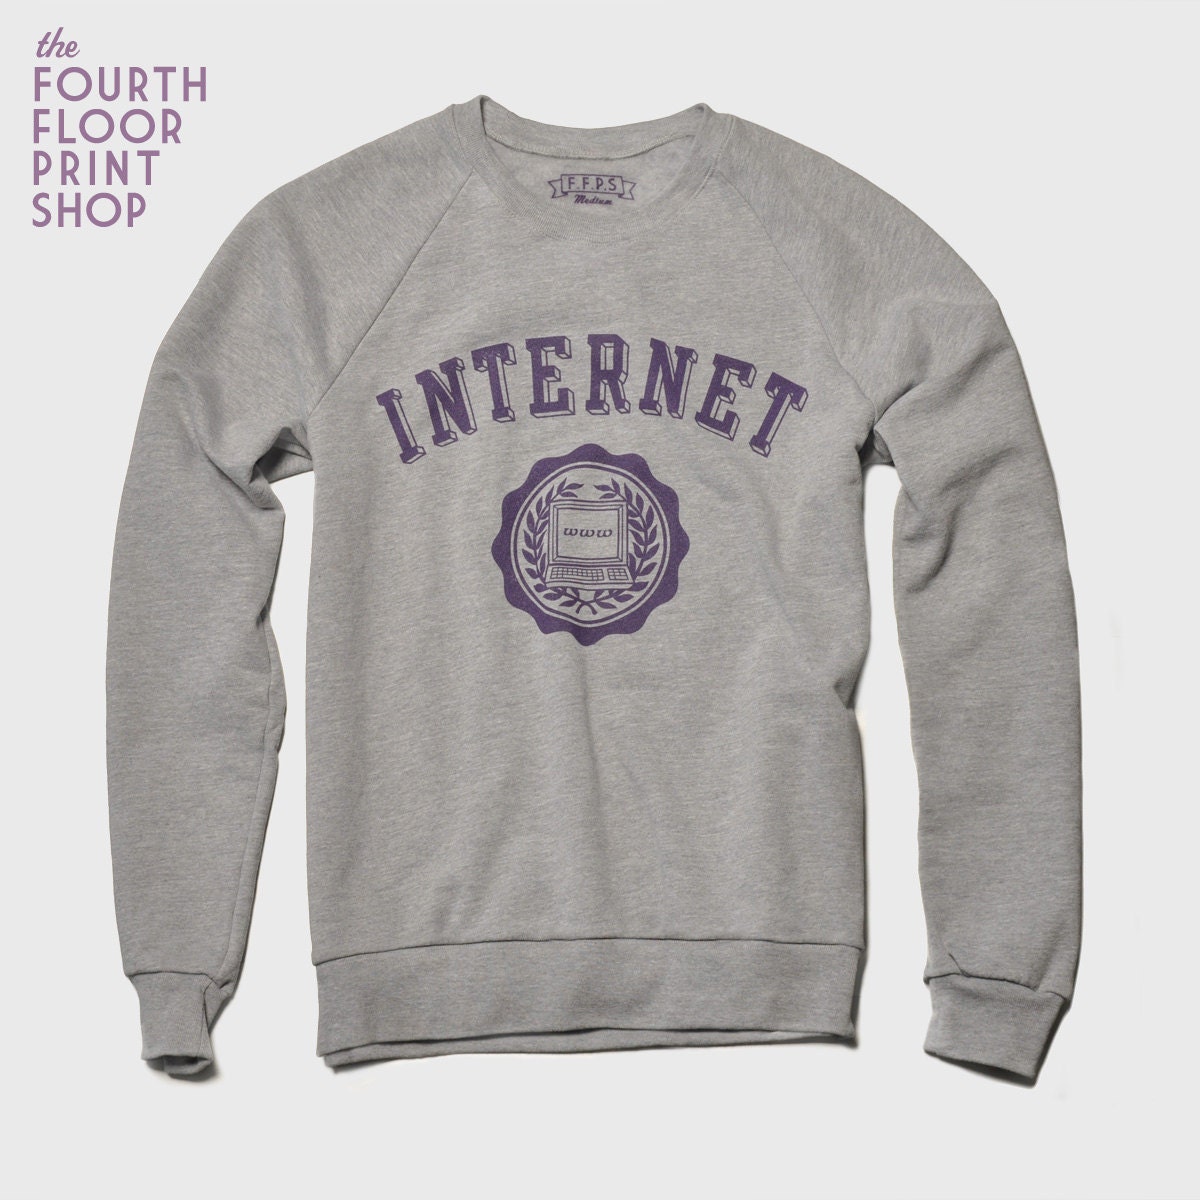 The INTERNET Sweatshirt